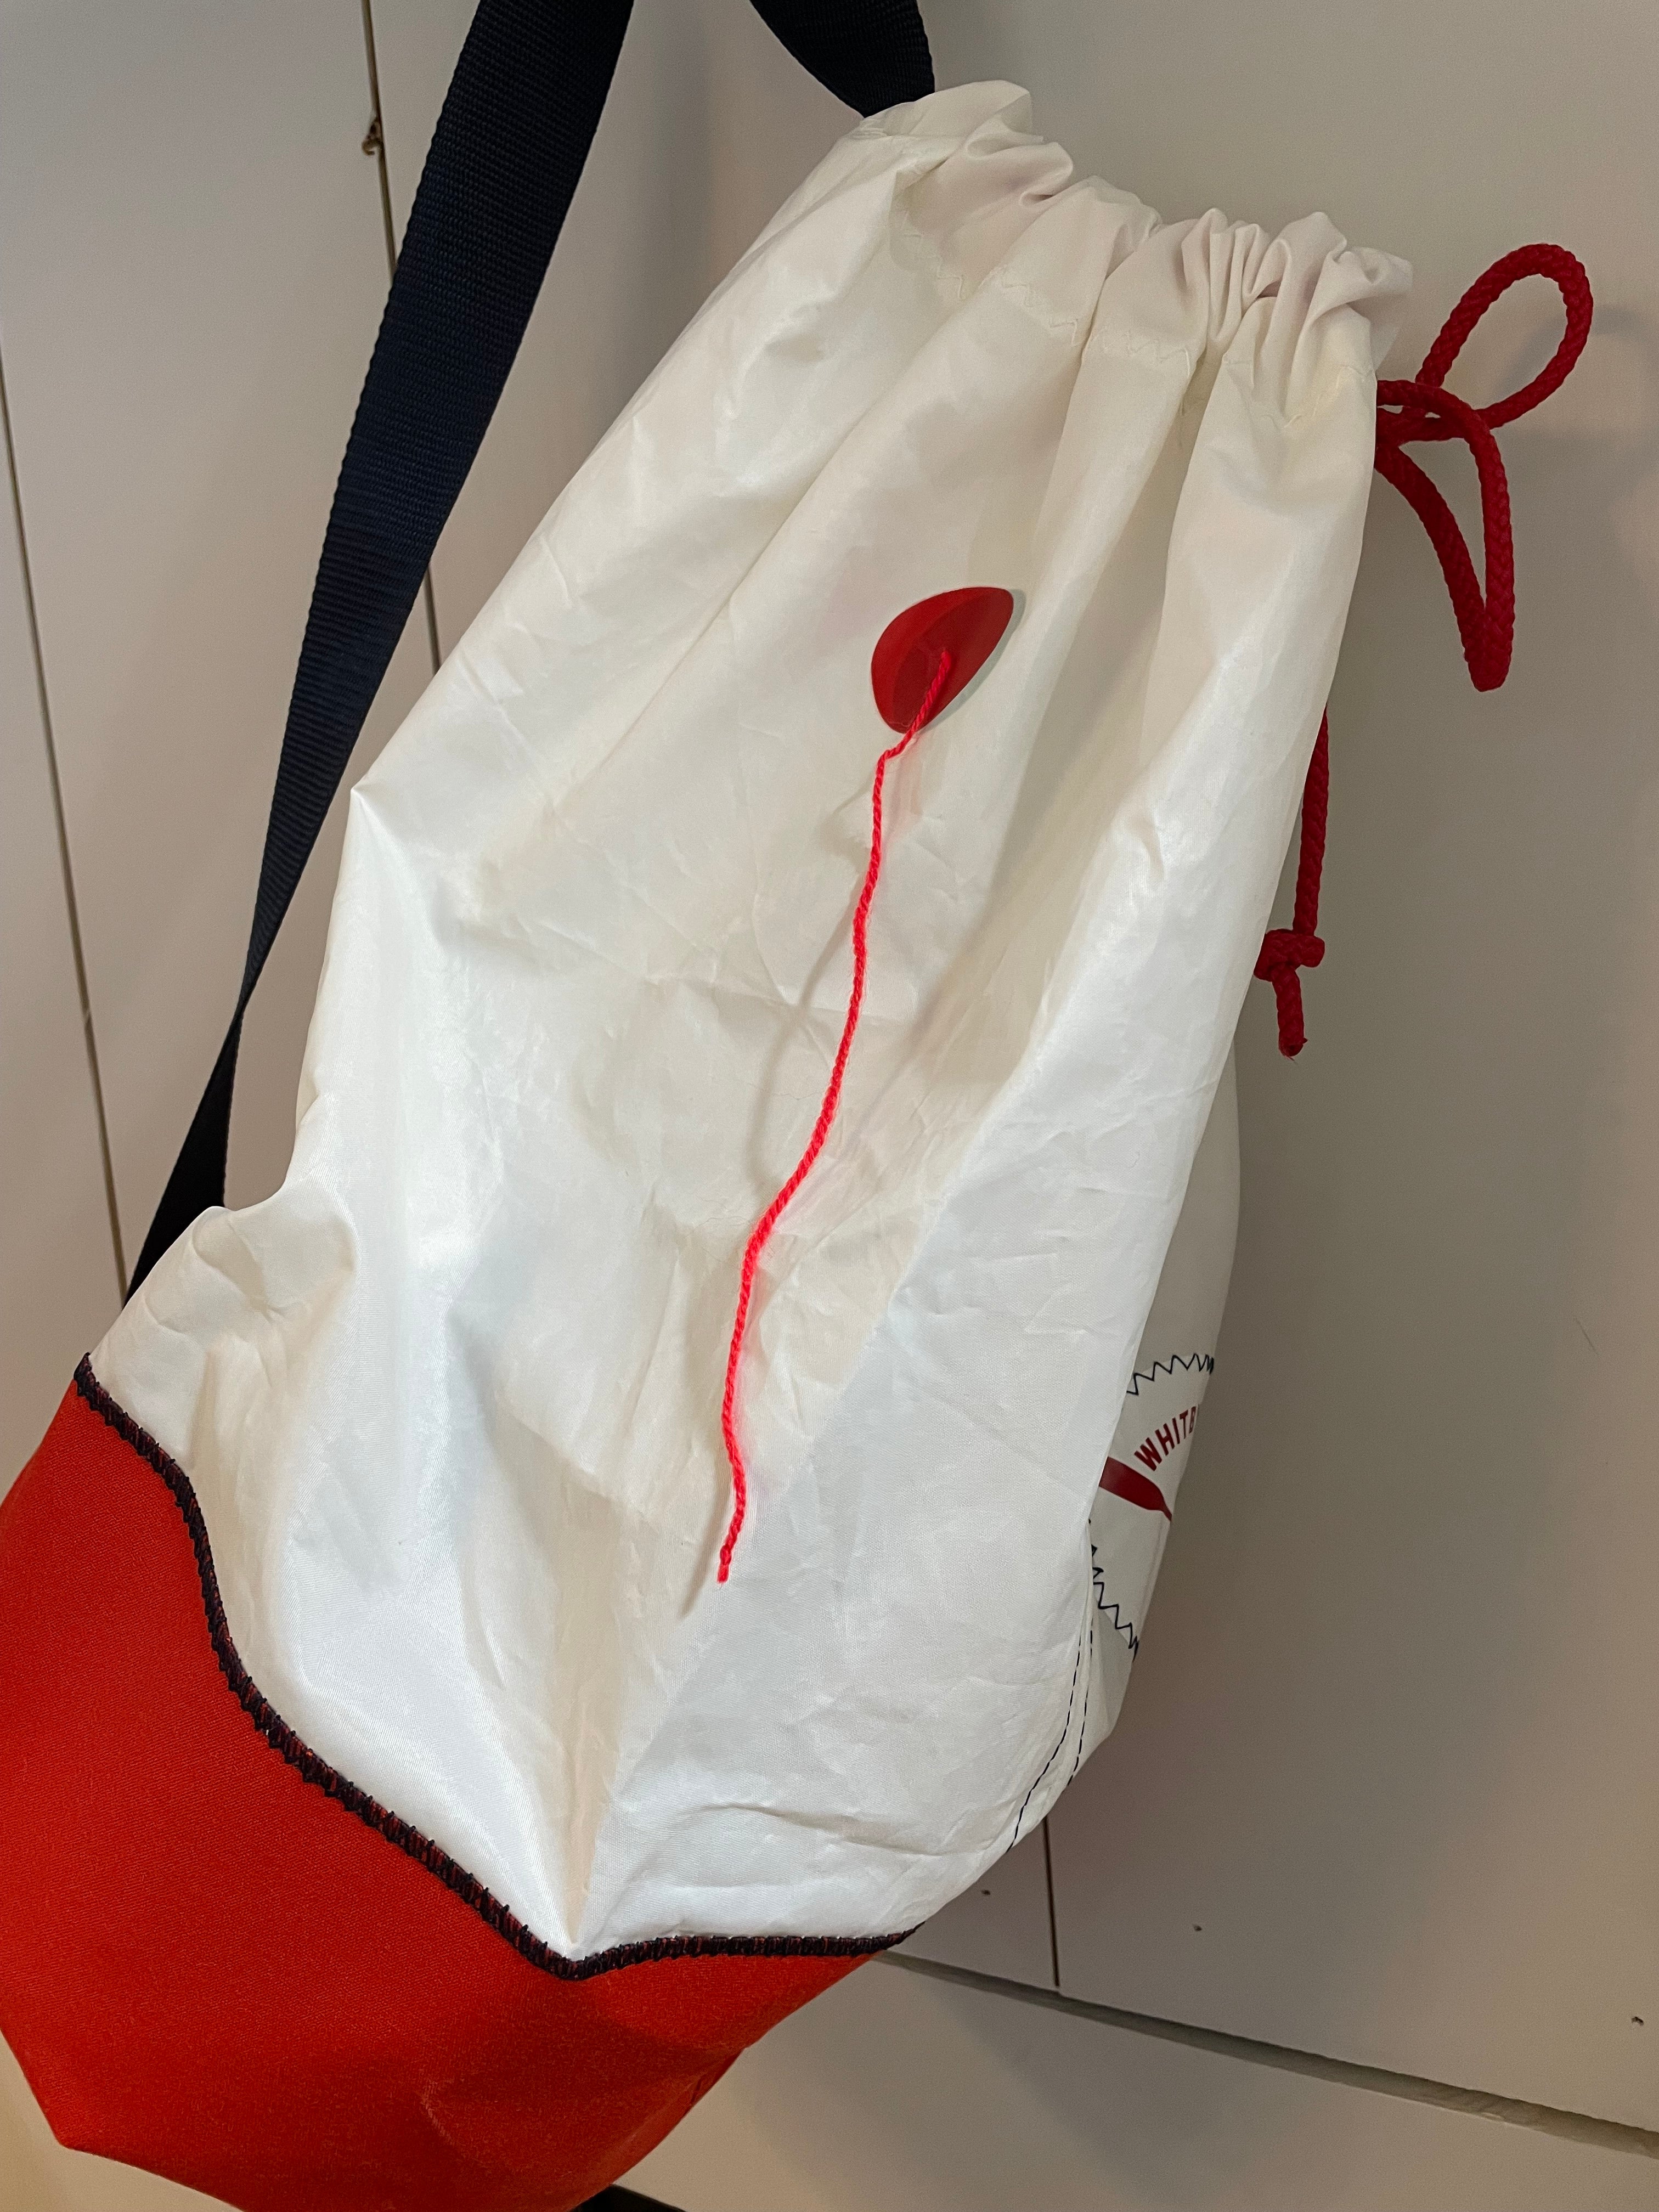 Recycled Sailcloth Duffle Bag